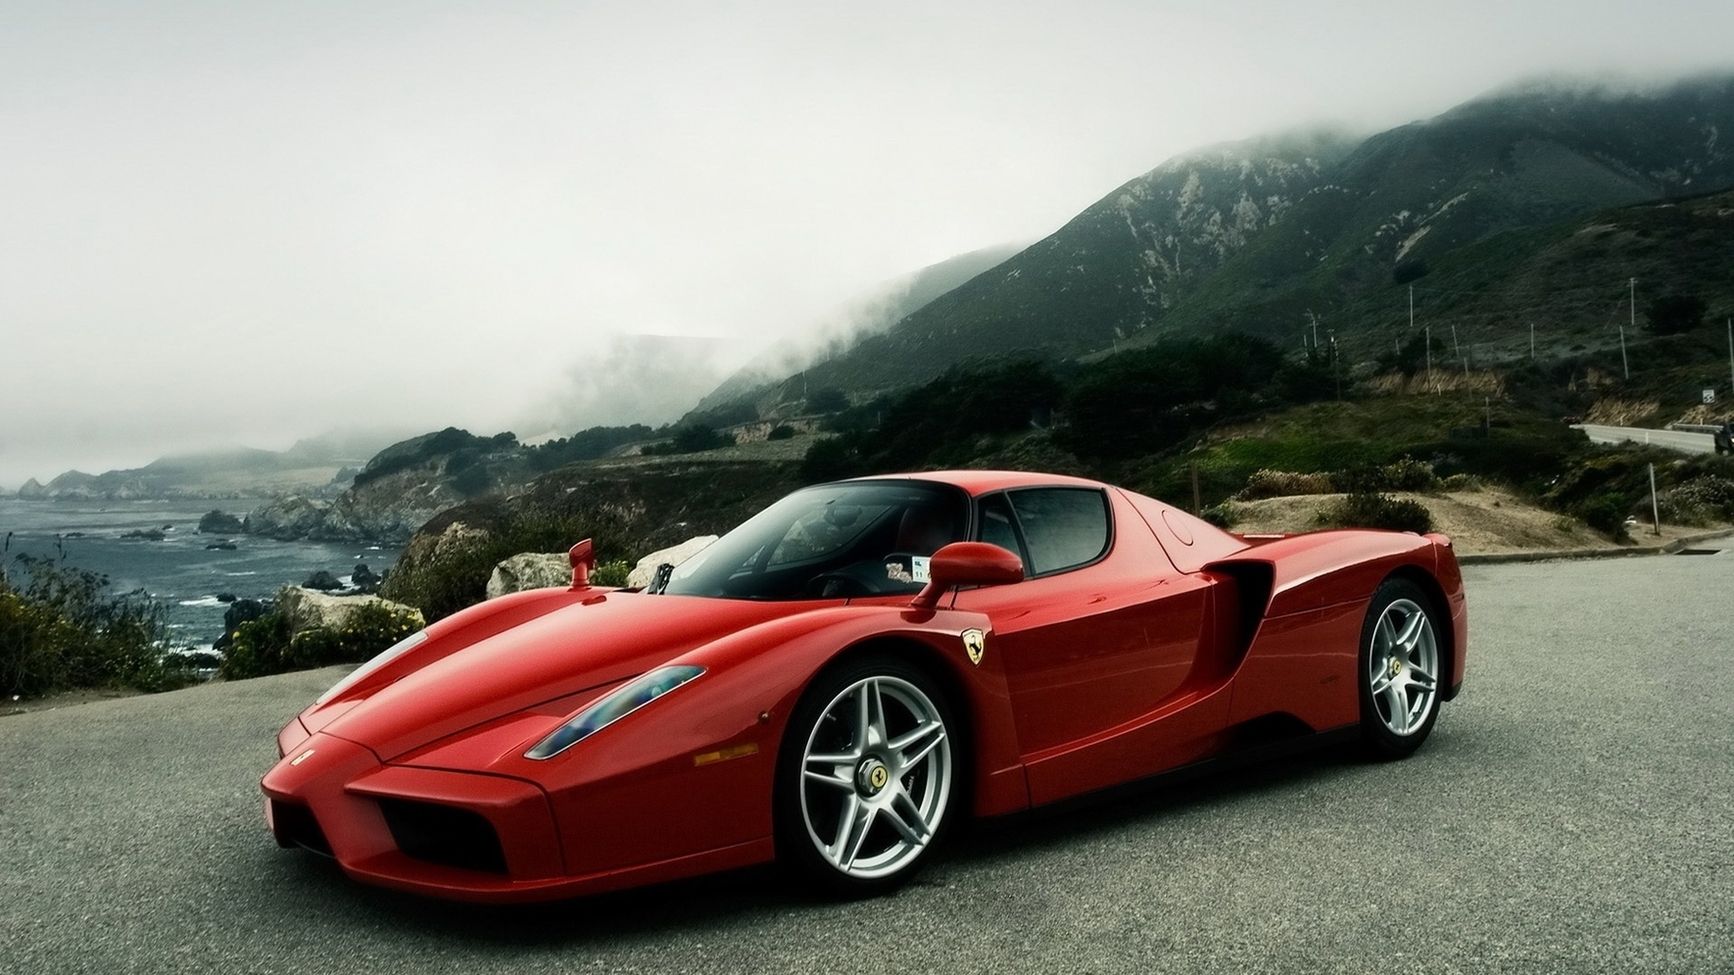 Ferrari Enzo On Road Car Image For Wallpaper Cars